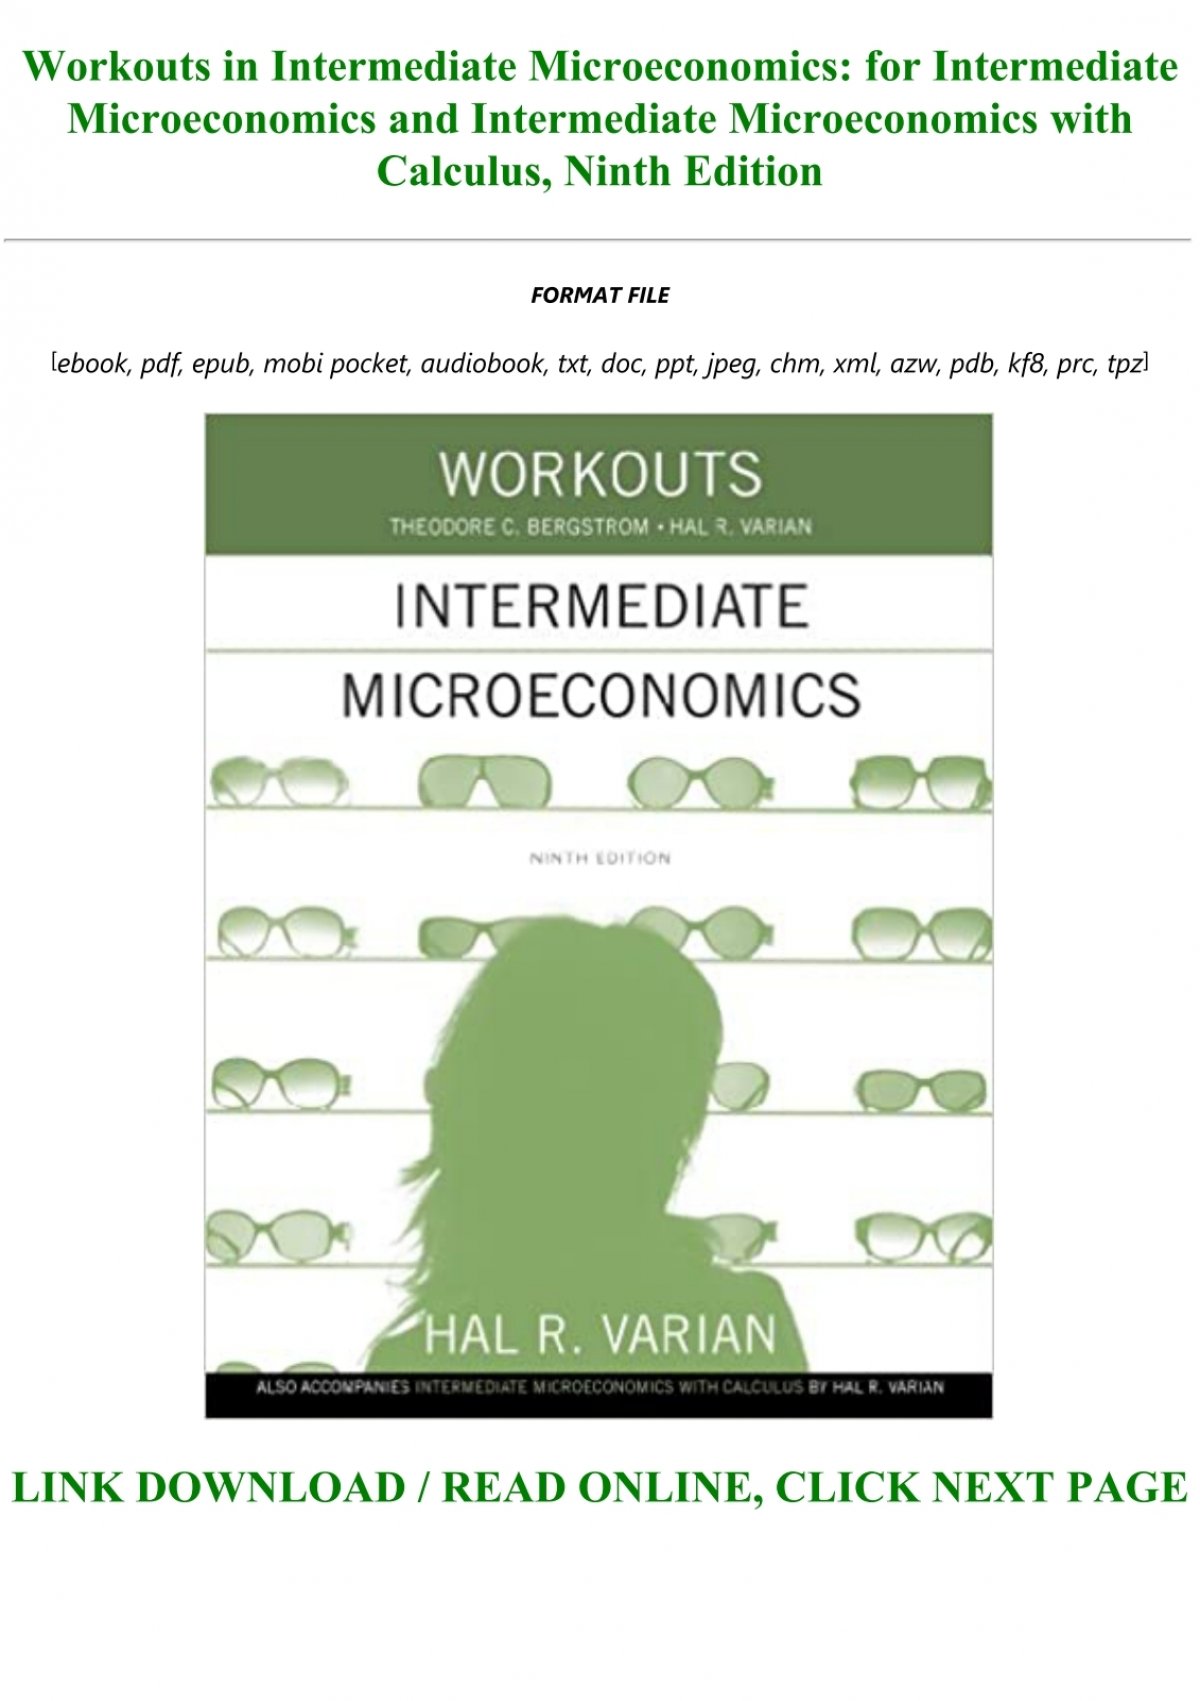 22 Full Body Workouts in intermediate microeconomics 8th edition pdf at Home